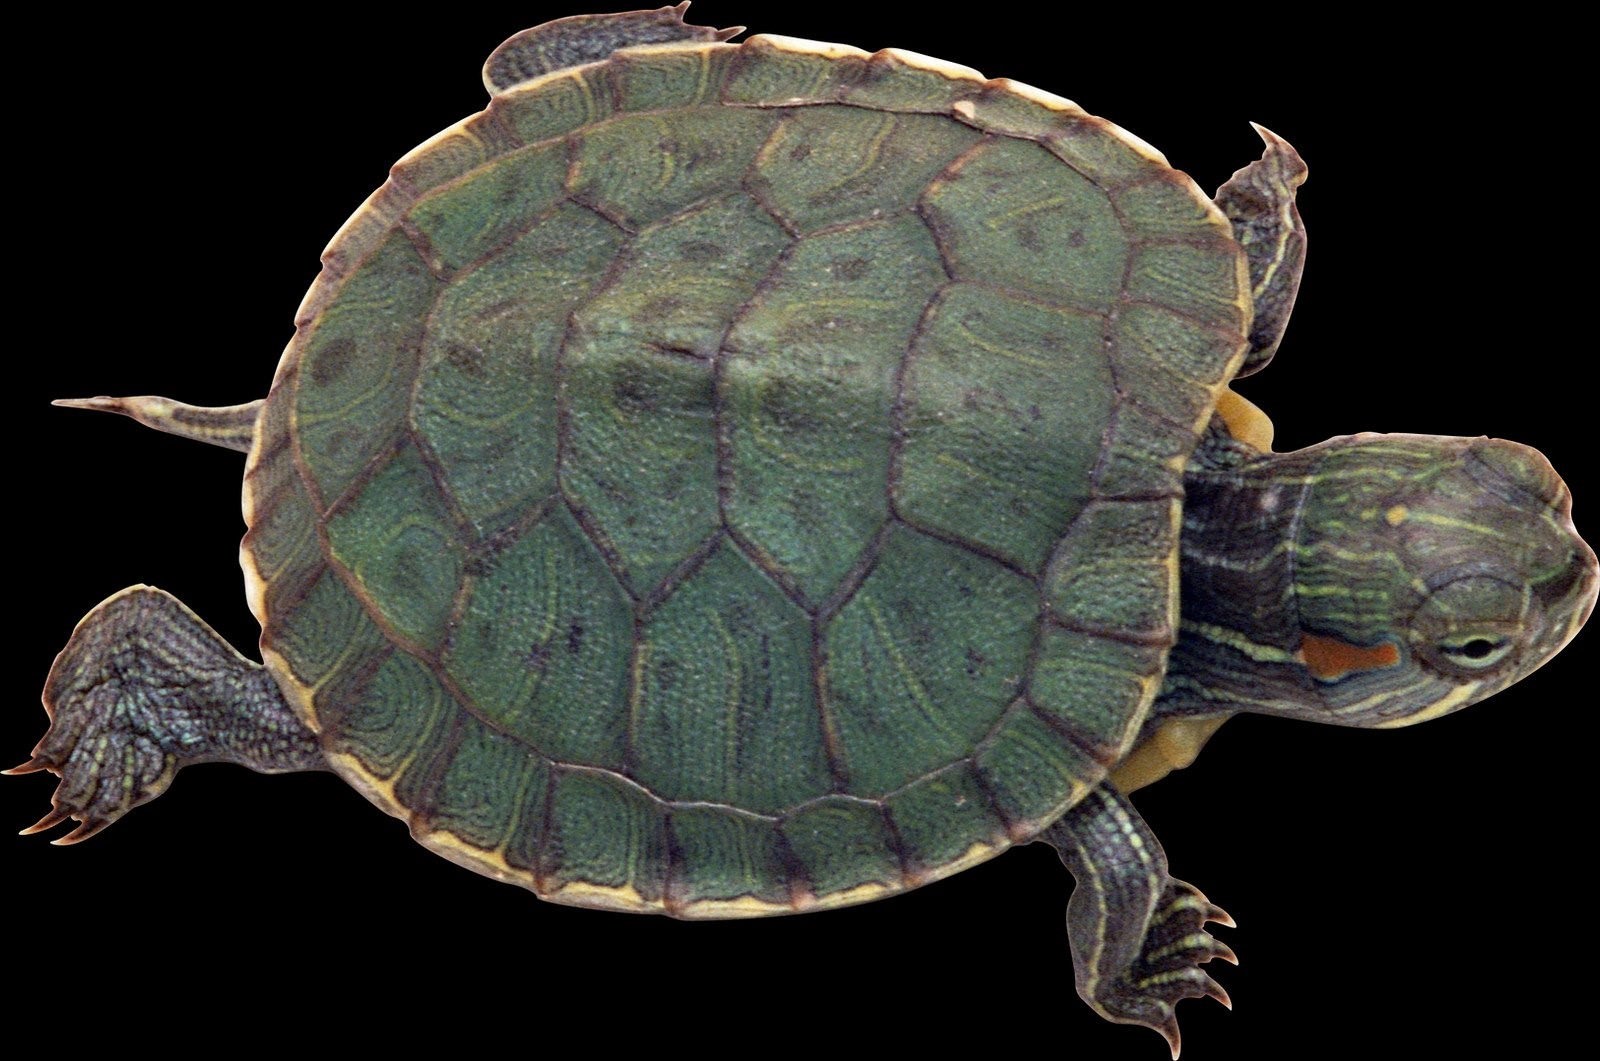 Черепахи без воды